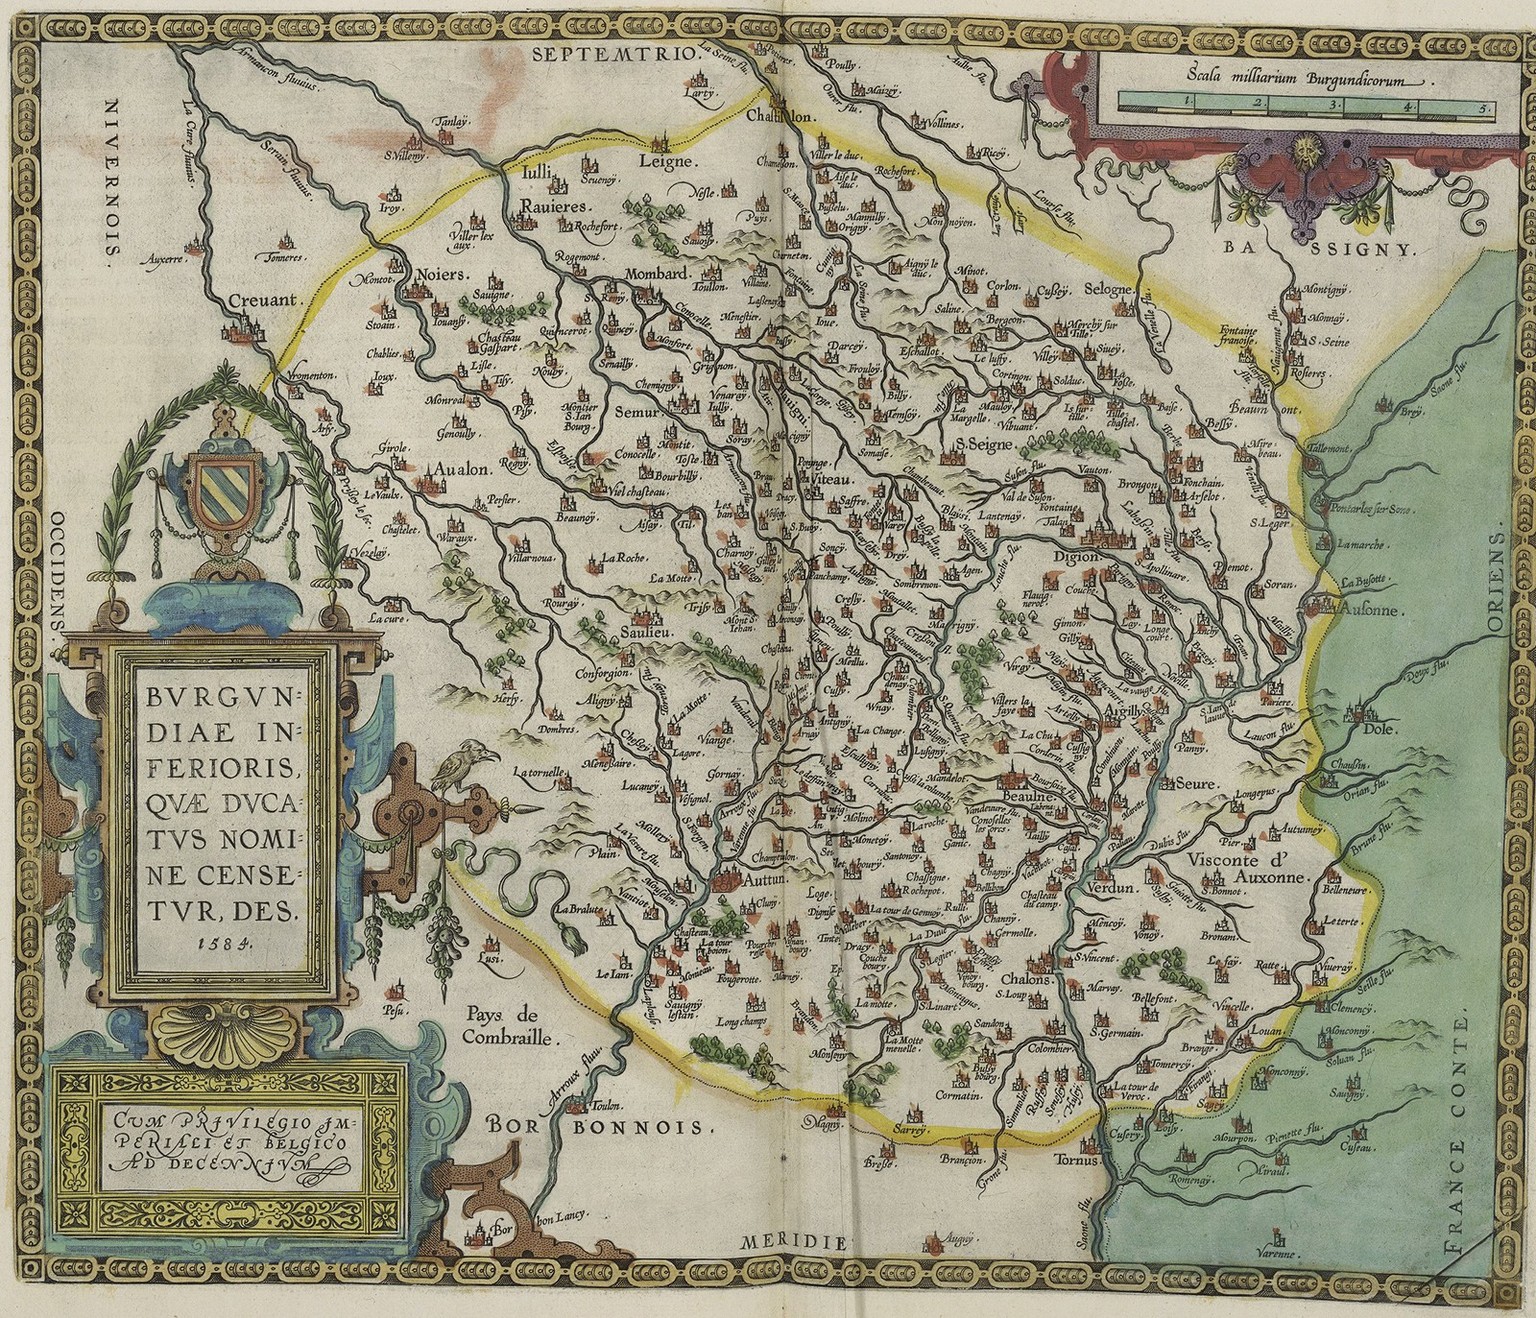 Karte von Burgund, um 1608.
https://upload.wikimedia.org/wikipedia/commons/8/83/Map_of_the_Duchy_of_Burgundy_by_Abraham_Ortelius.jpeg